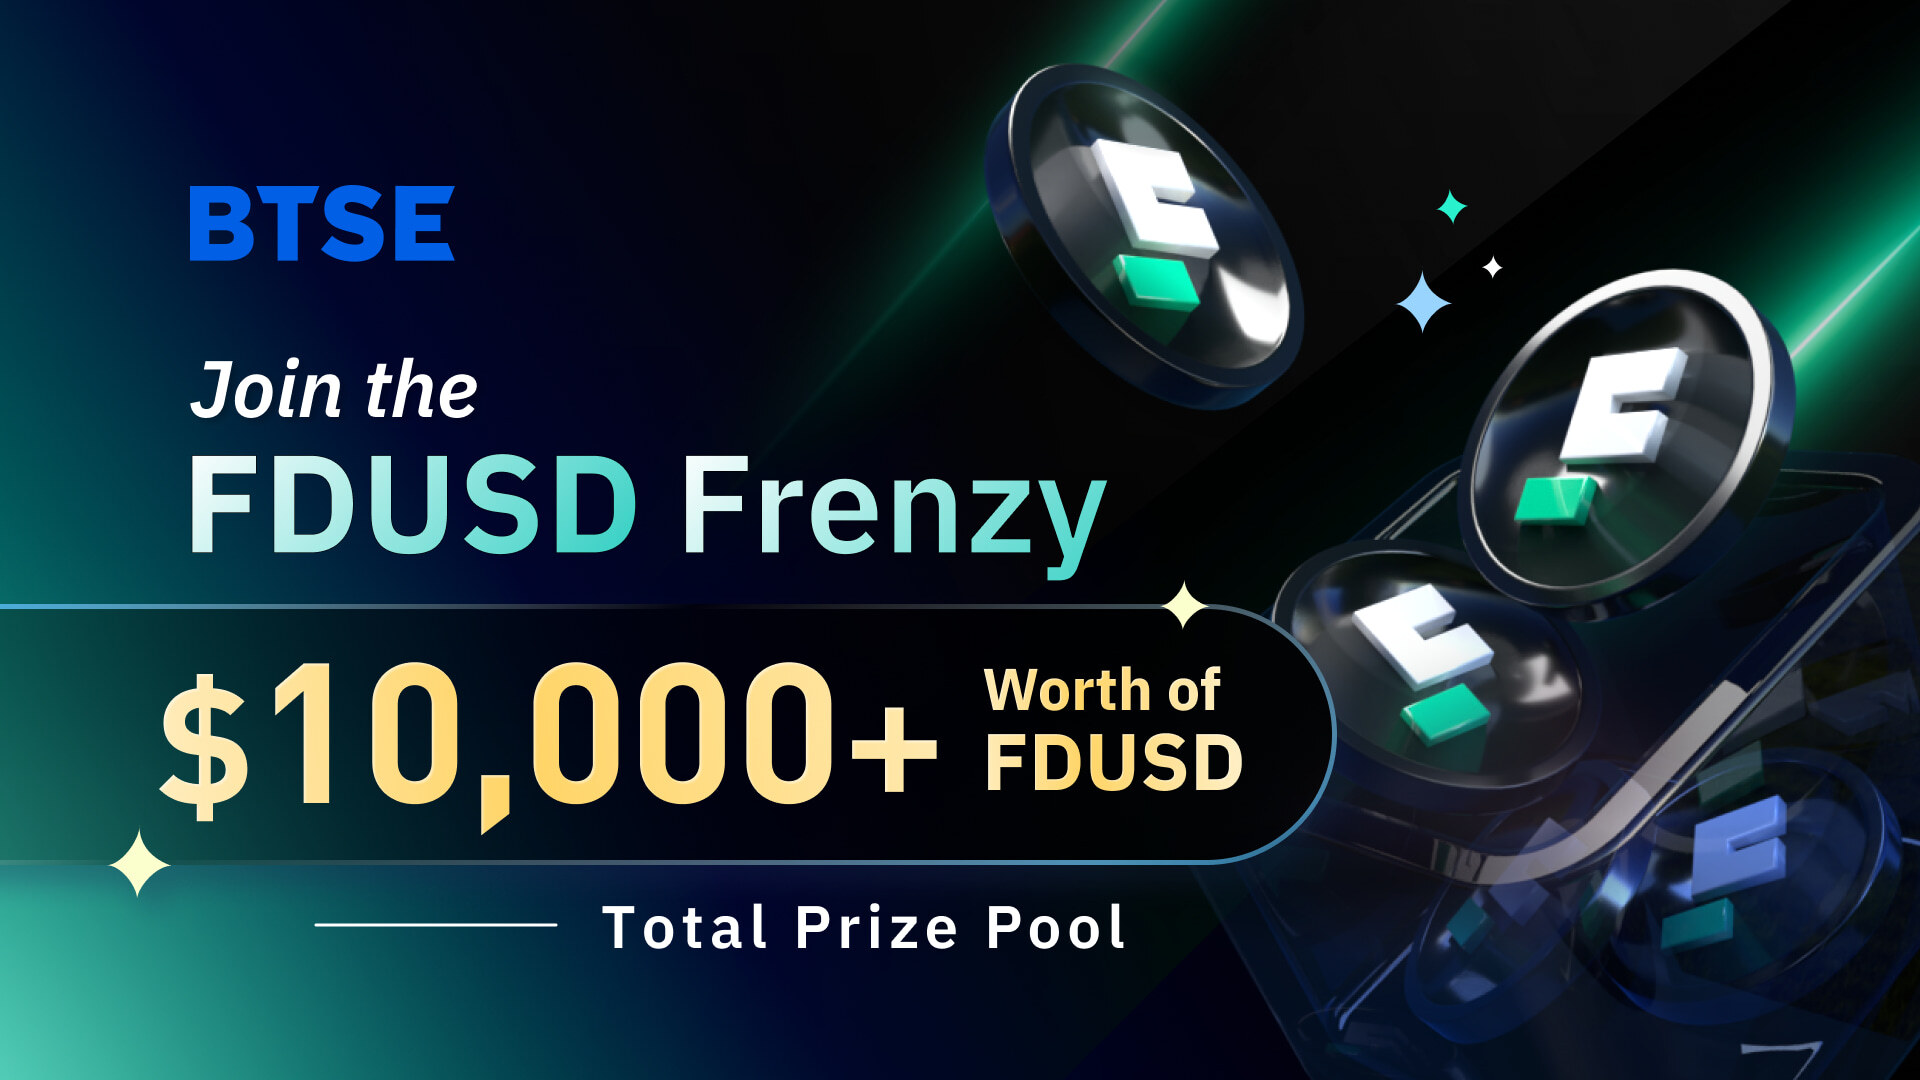 FDUSD Frenzy: A $10,000+ Prize Pool Awaits!